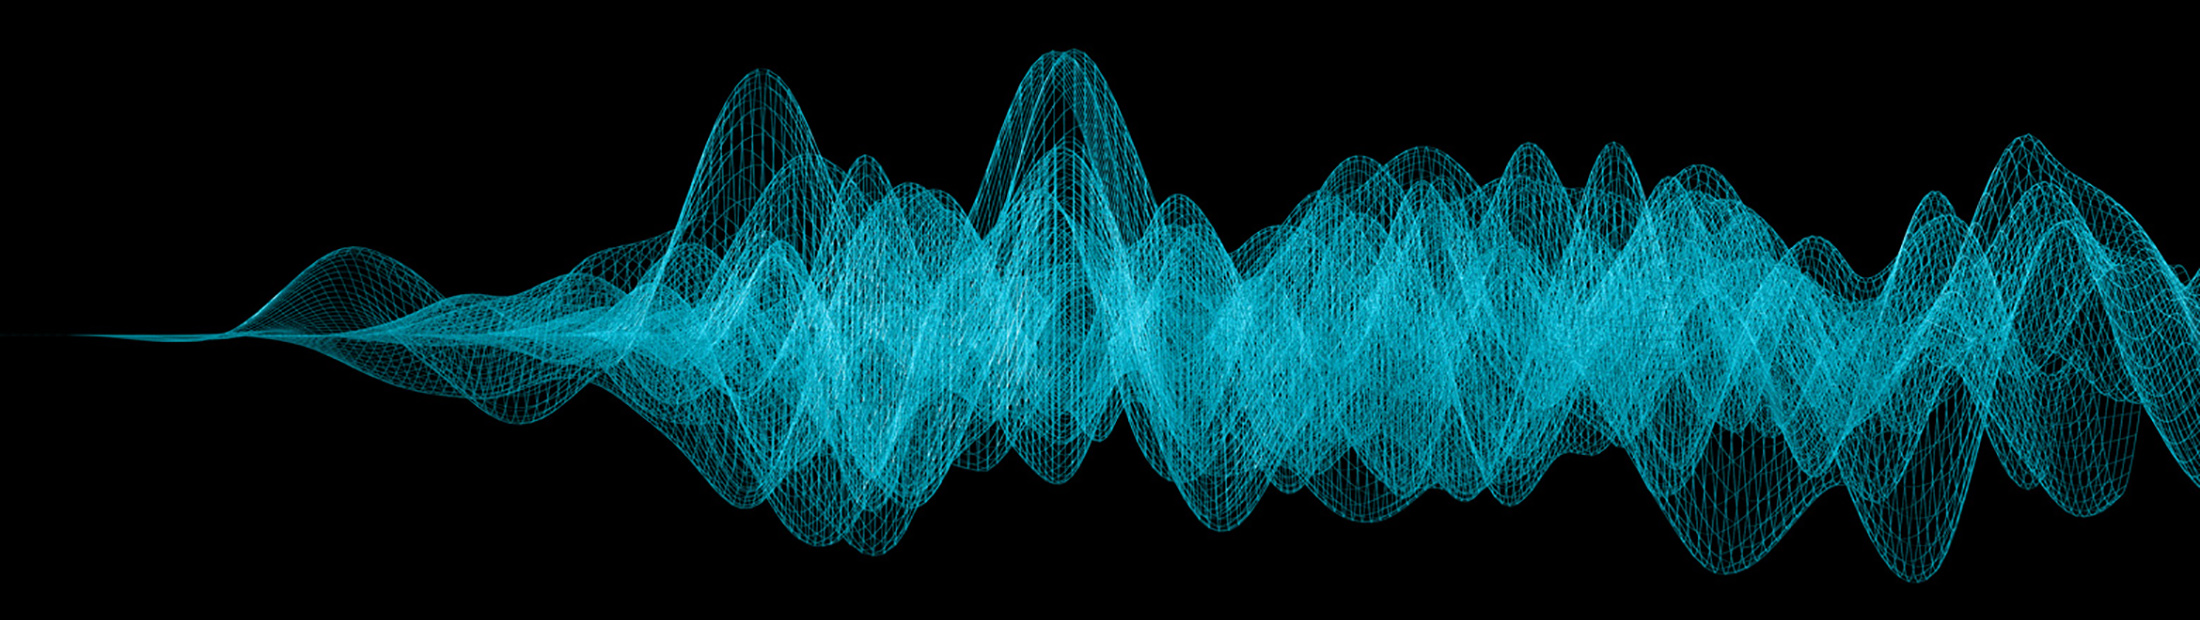 an illustration of sound wave on black background